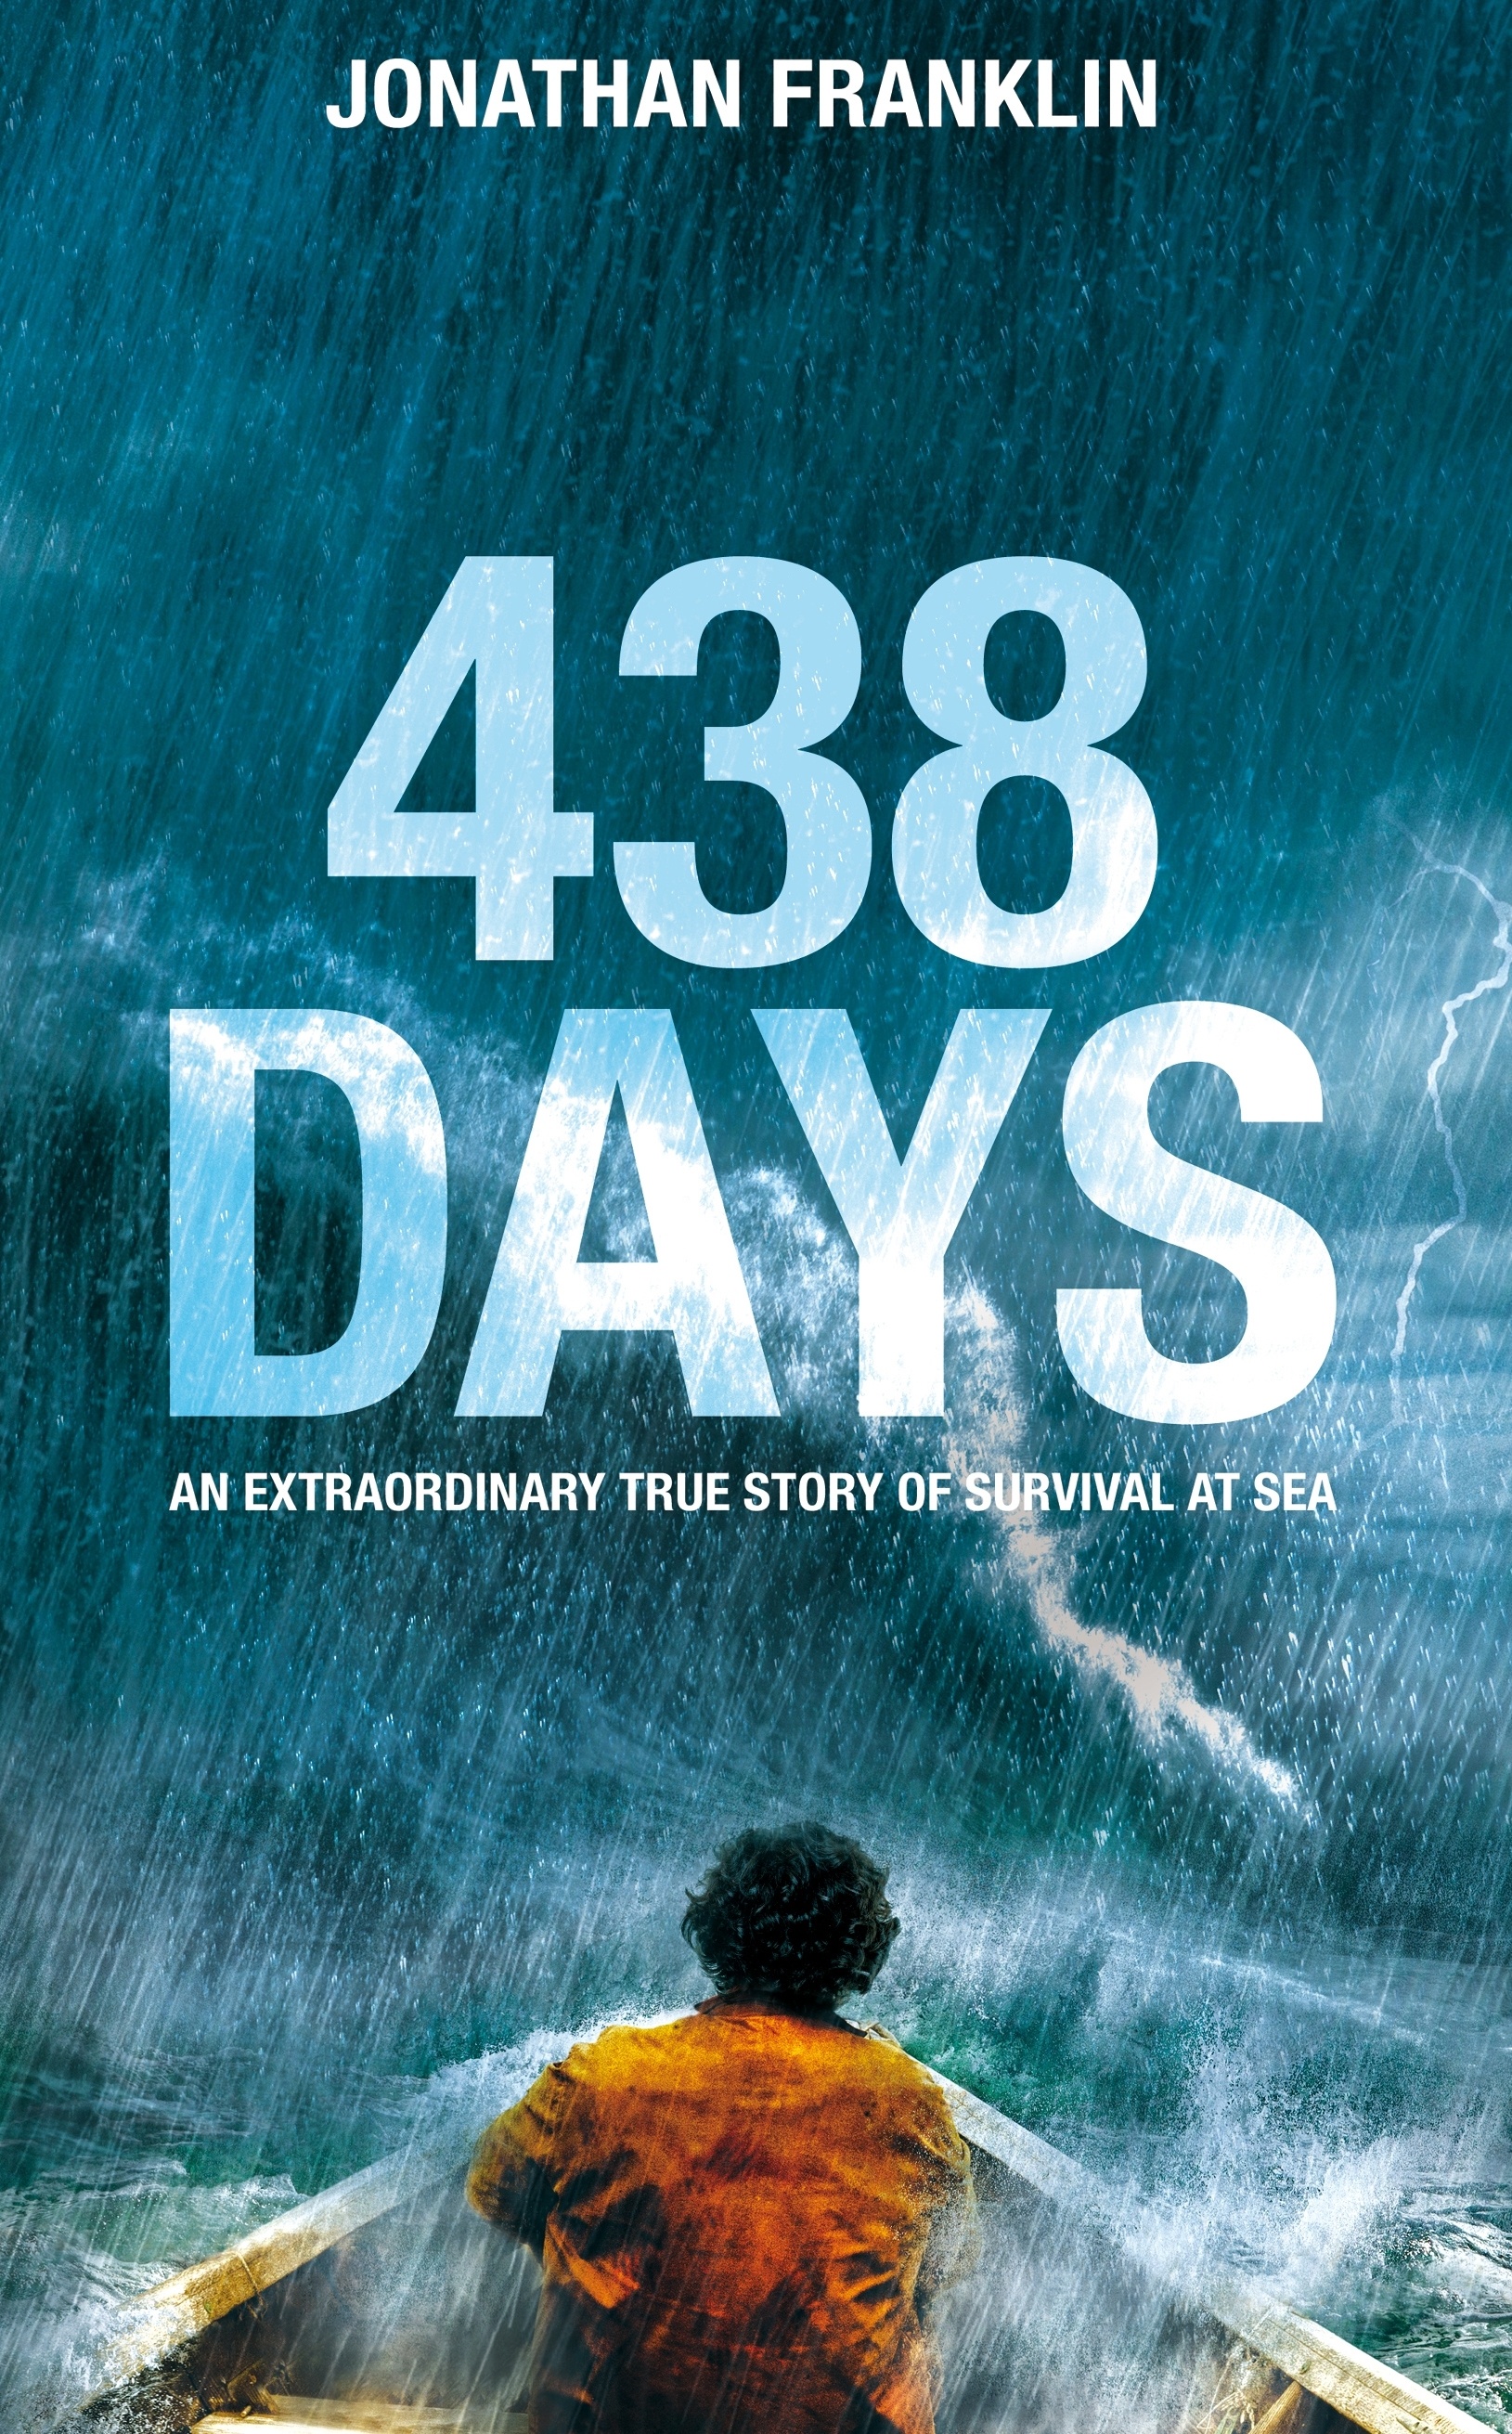 438 Days "an extraordinary true history of survival at sea"